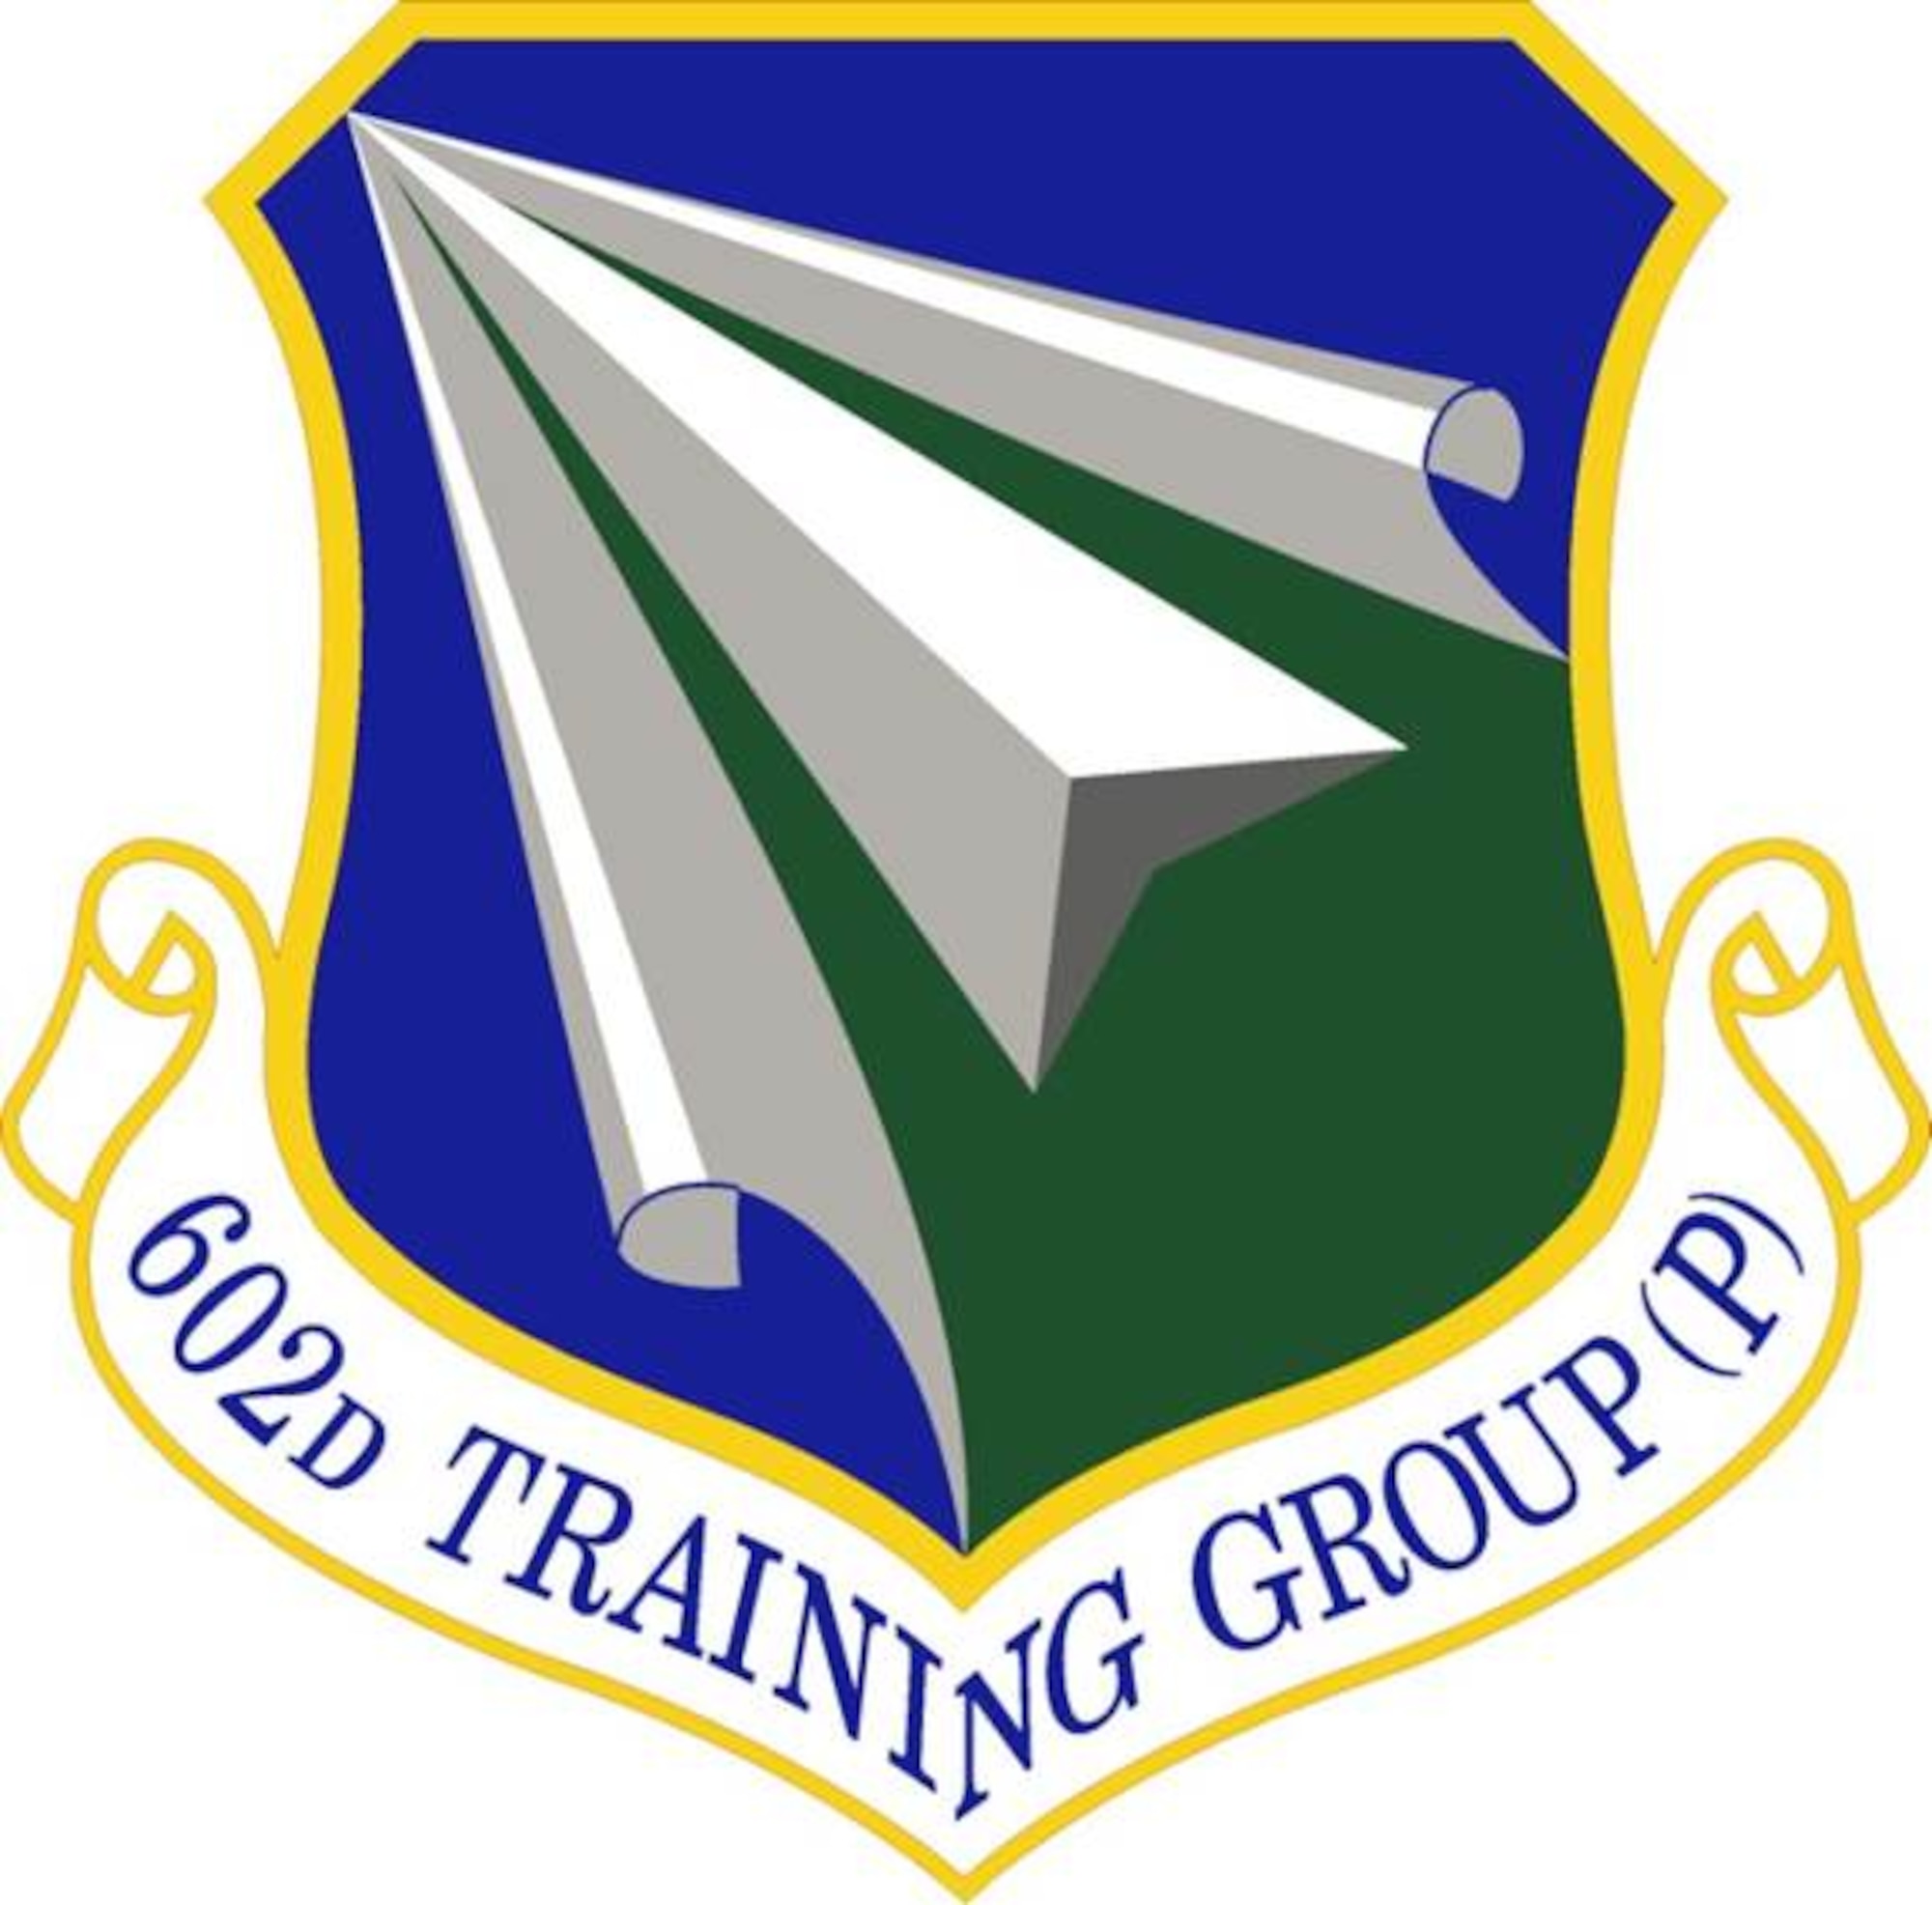 602nd Training Group(P) Shield